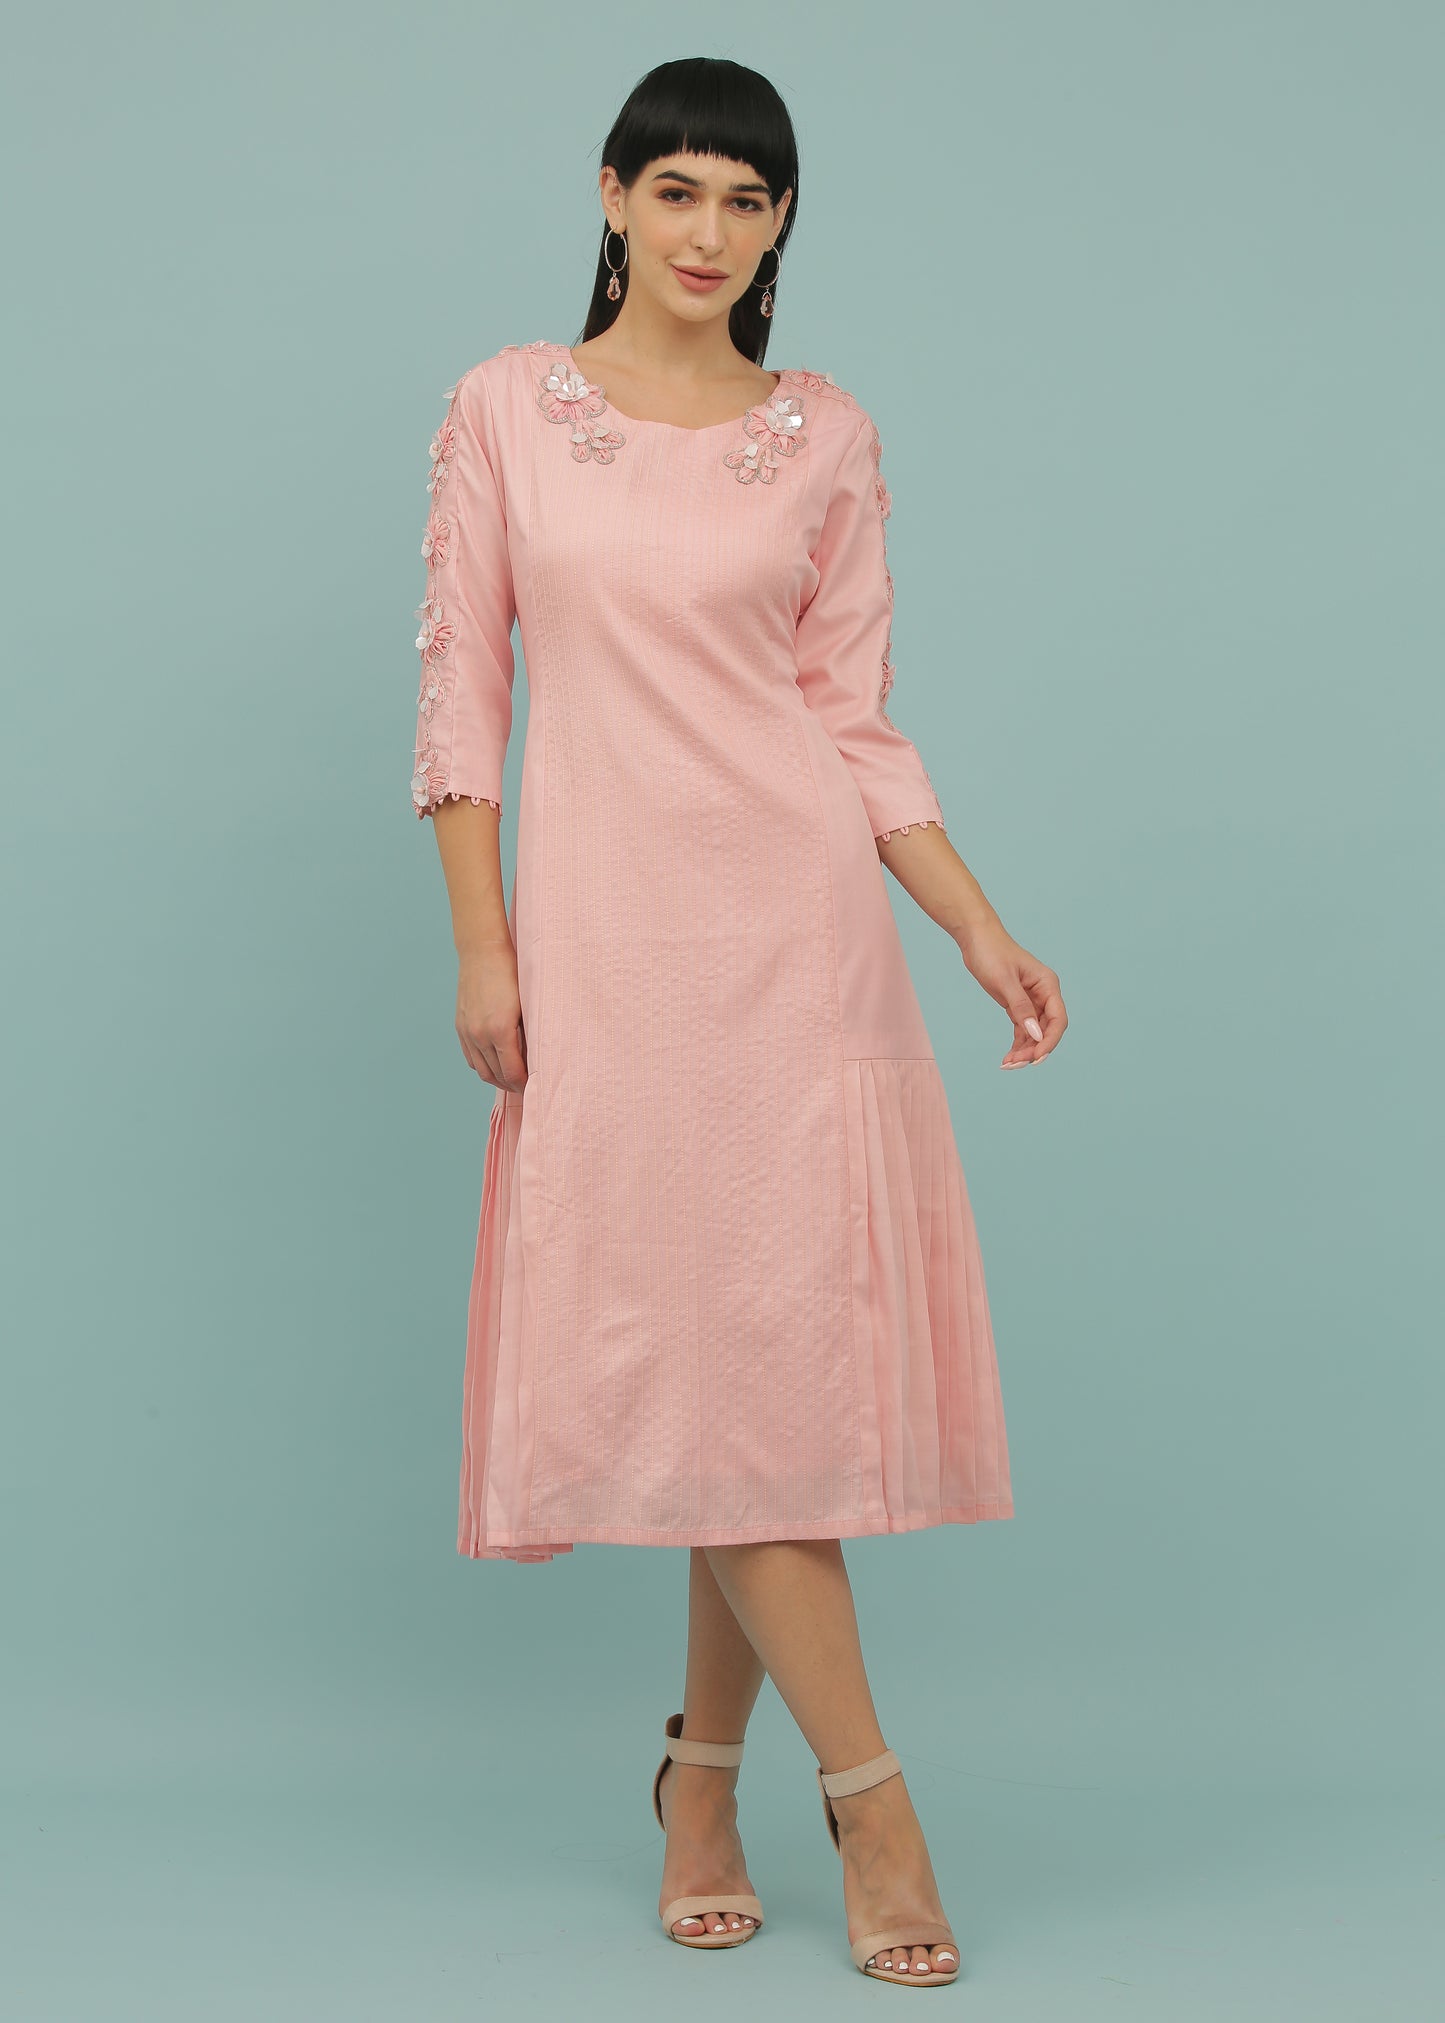 Blush Pink A-Line Dress